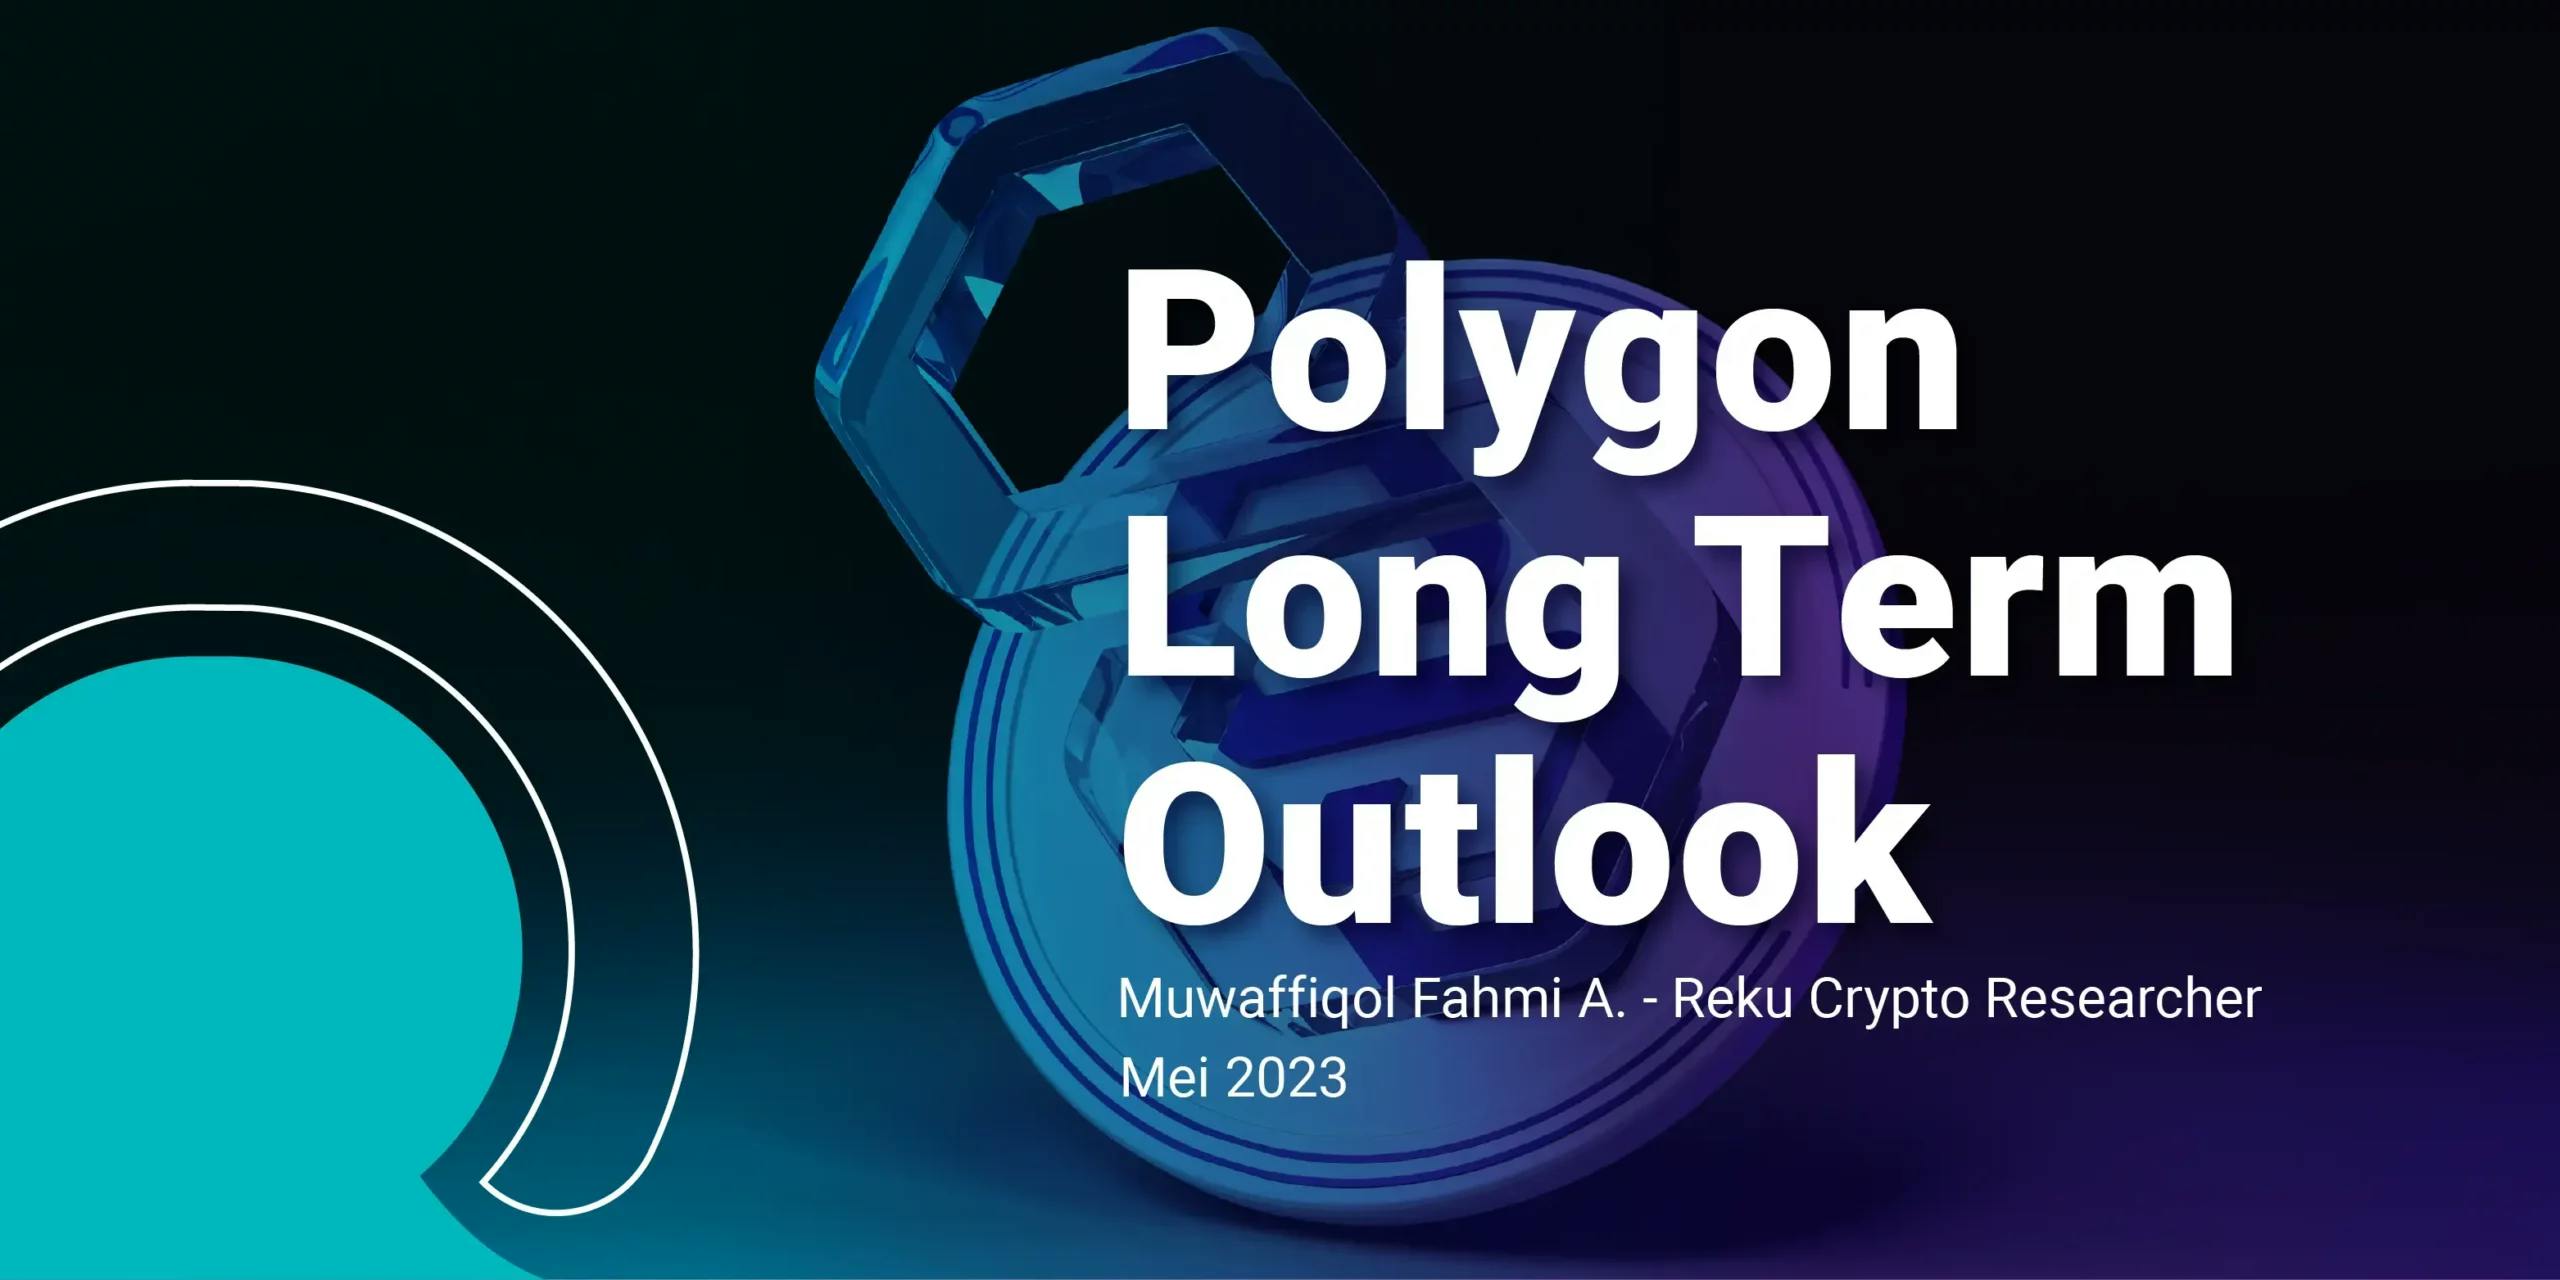 Polygon (MATIC) Long Term Outlook